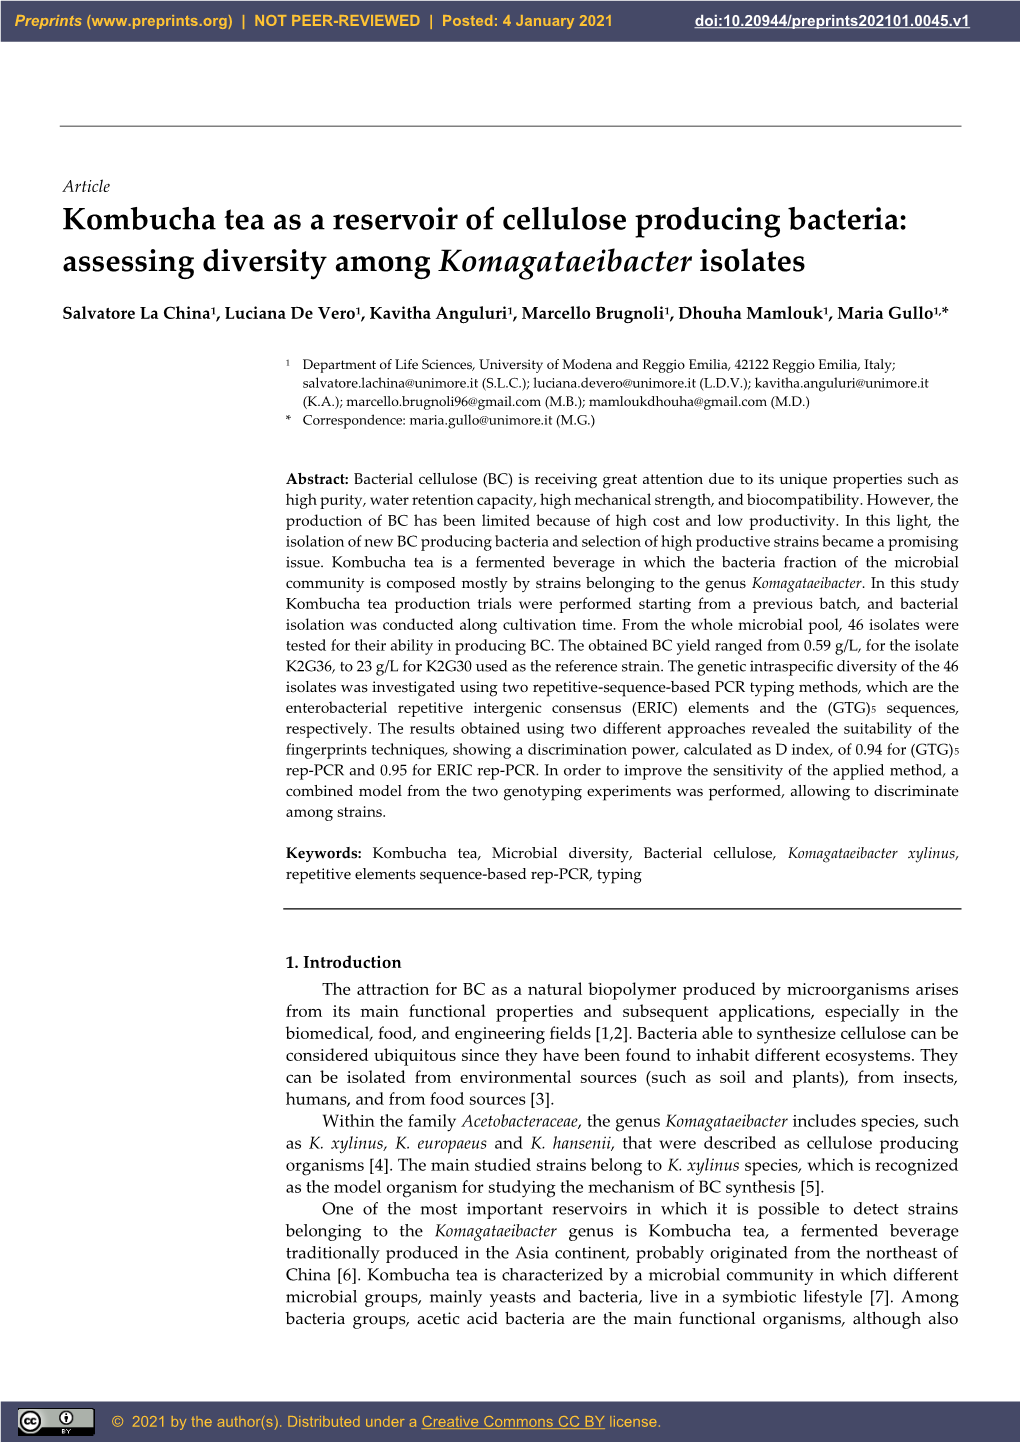 Kombucha Tea As a Reservoir of Cellulose Producing Bacteria: Assessing Diversity Among Komagataeibacter Isolates